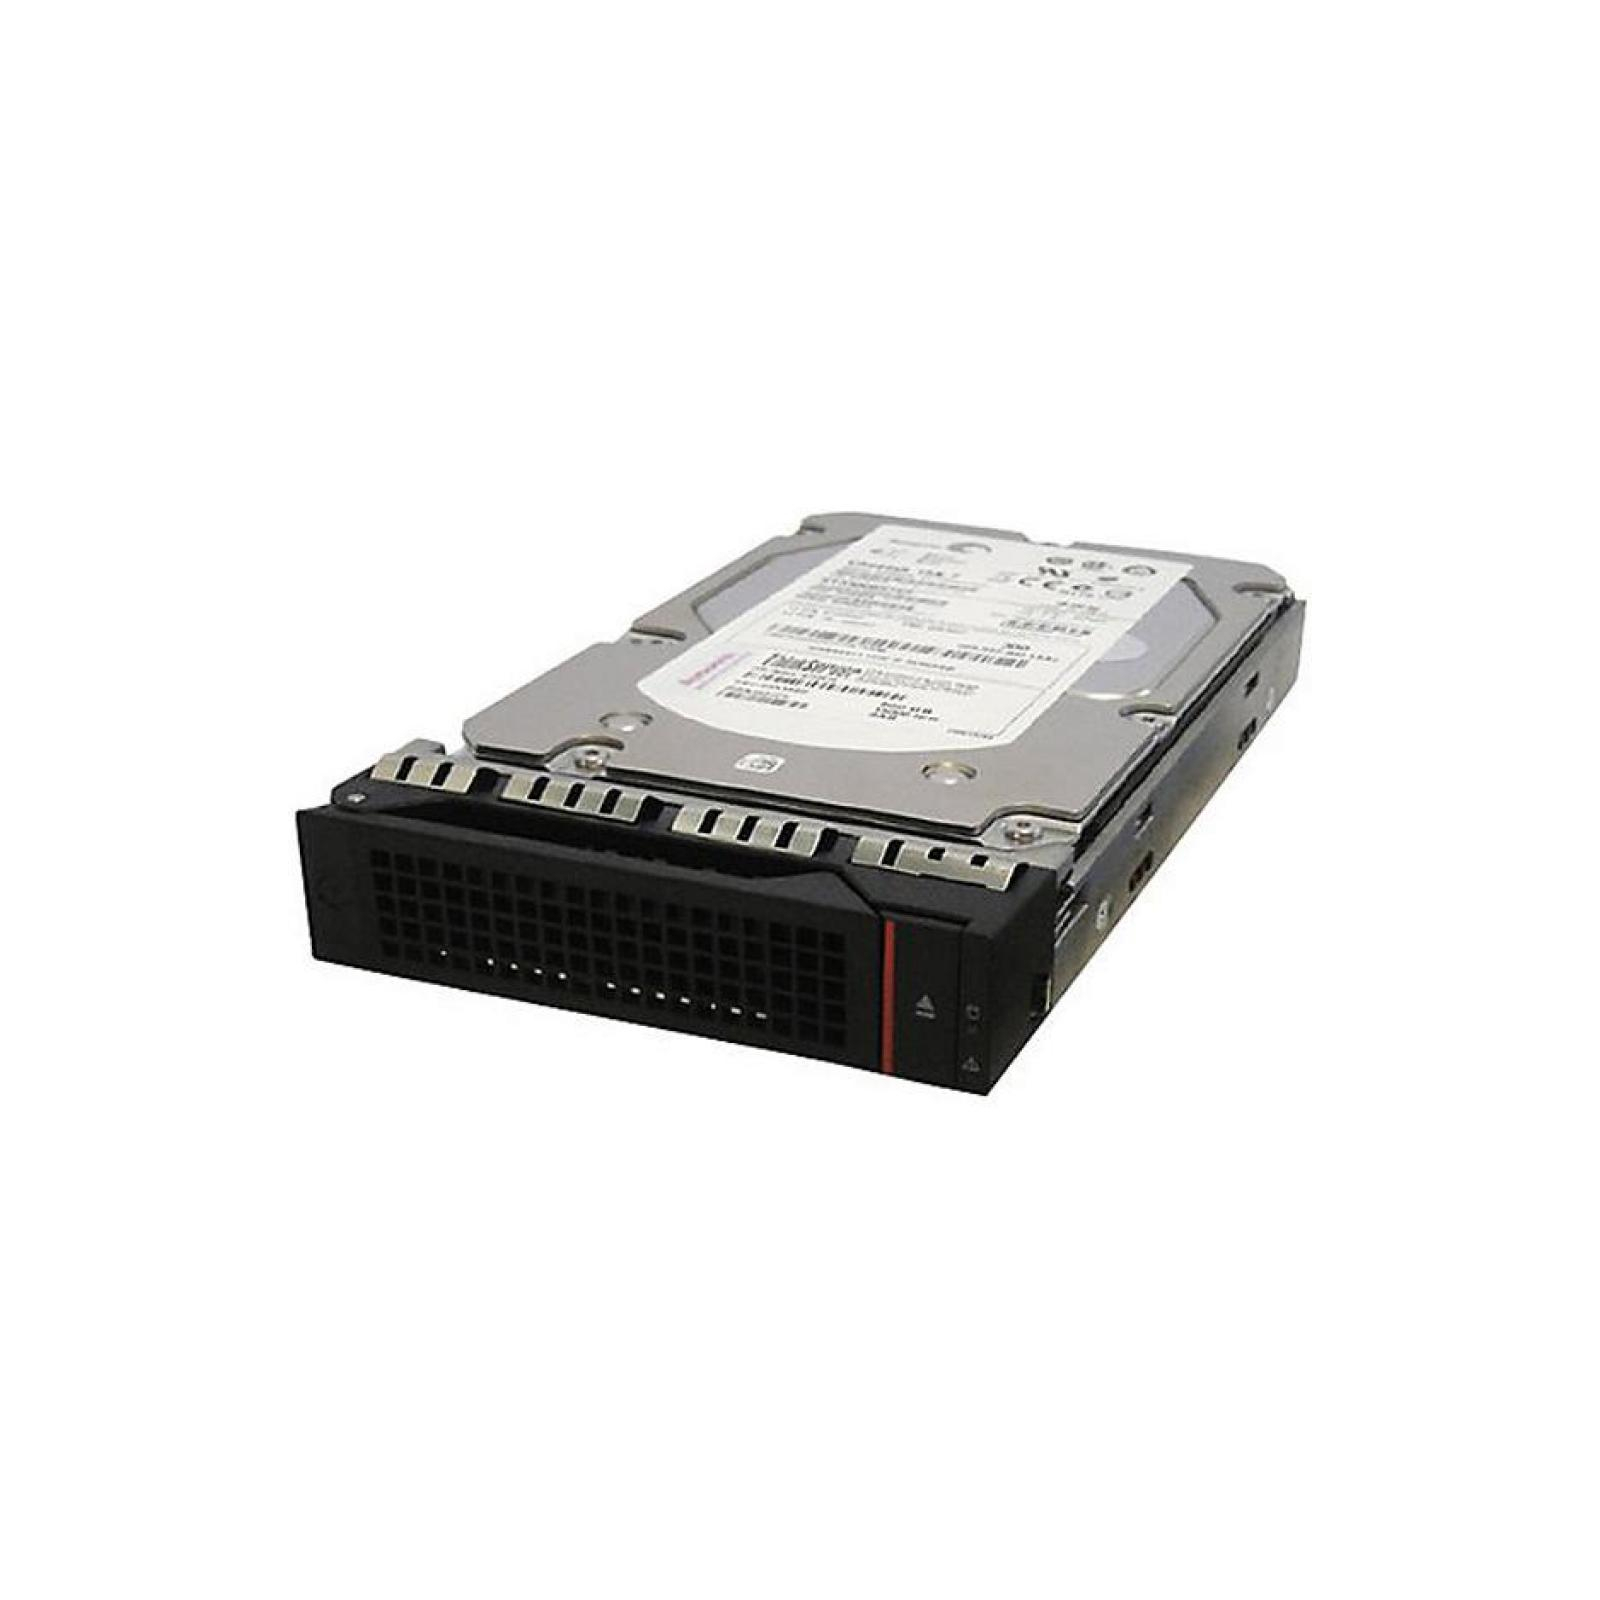 Жесткий диск для сервера Lenovo 600GB 10K SAS 2.5 12Gb HotSwap 512n (7XB7A00025)